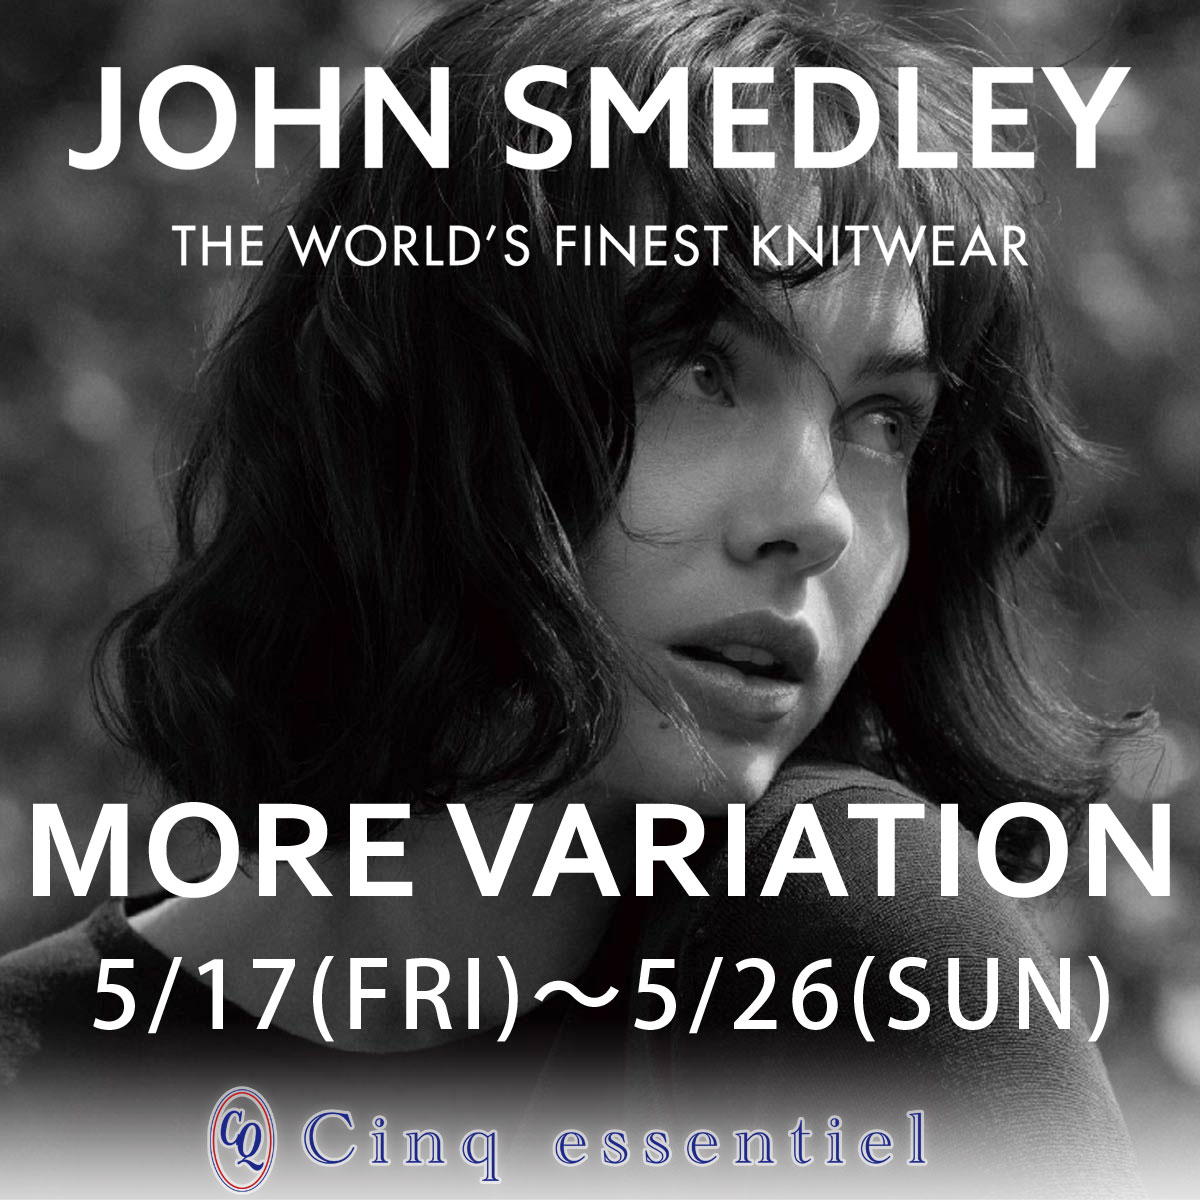 JOHN SMEDLEY MORE VARIATION